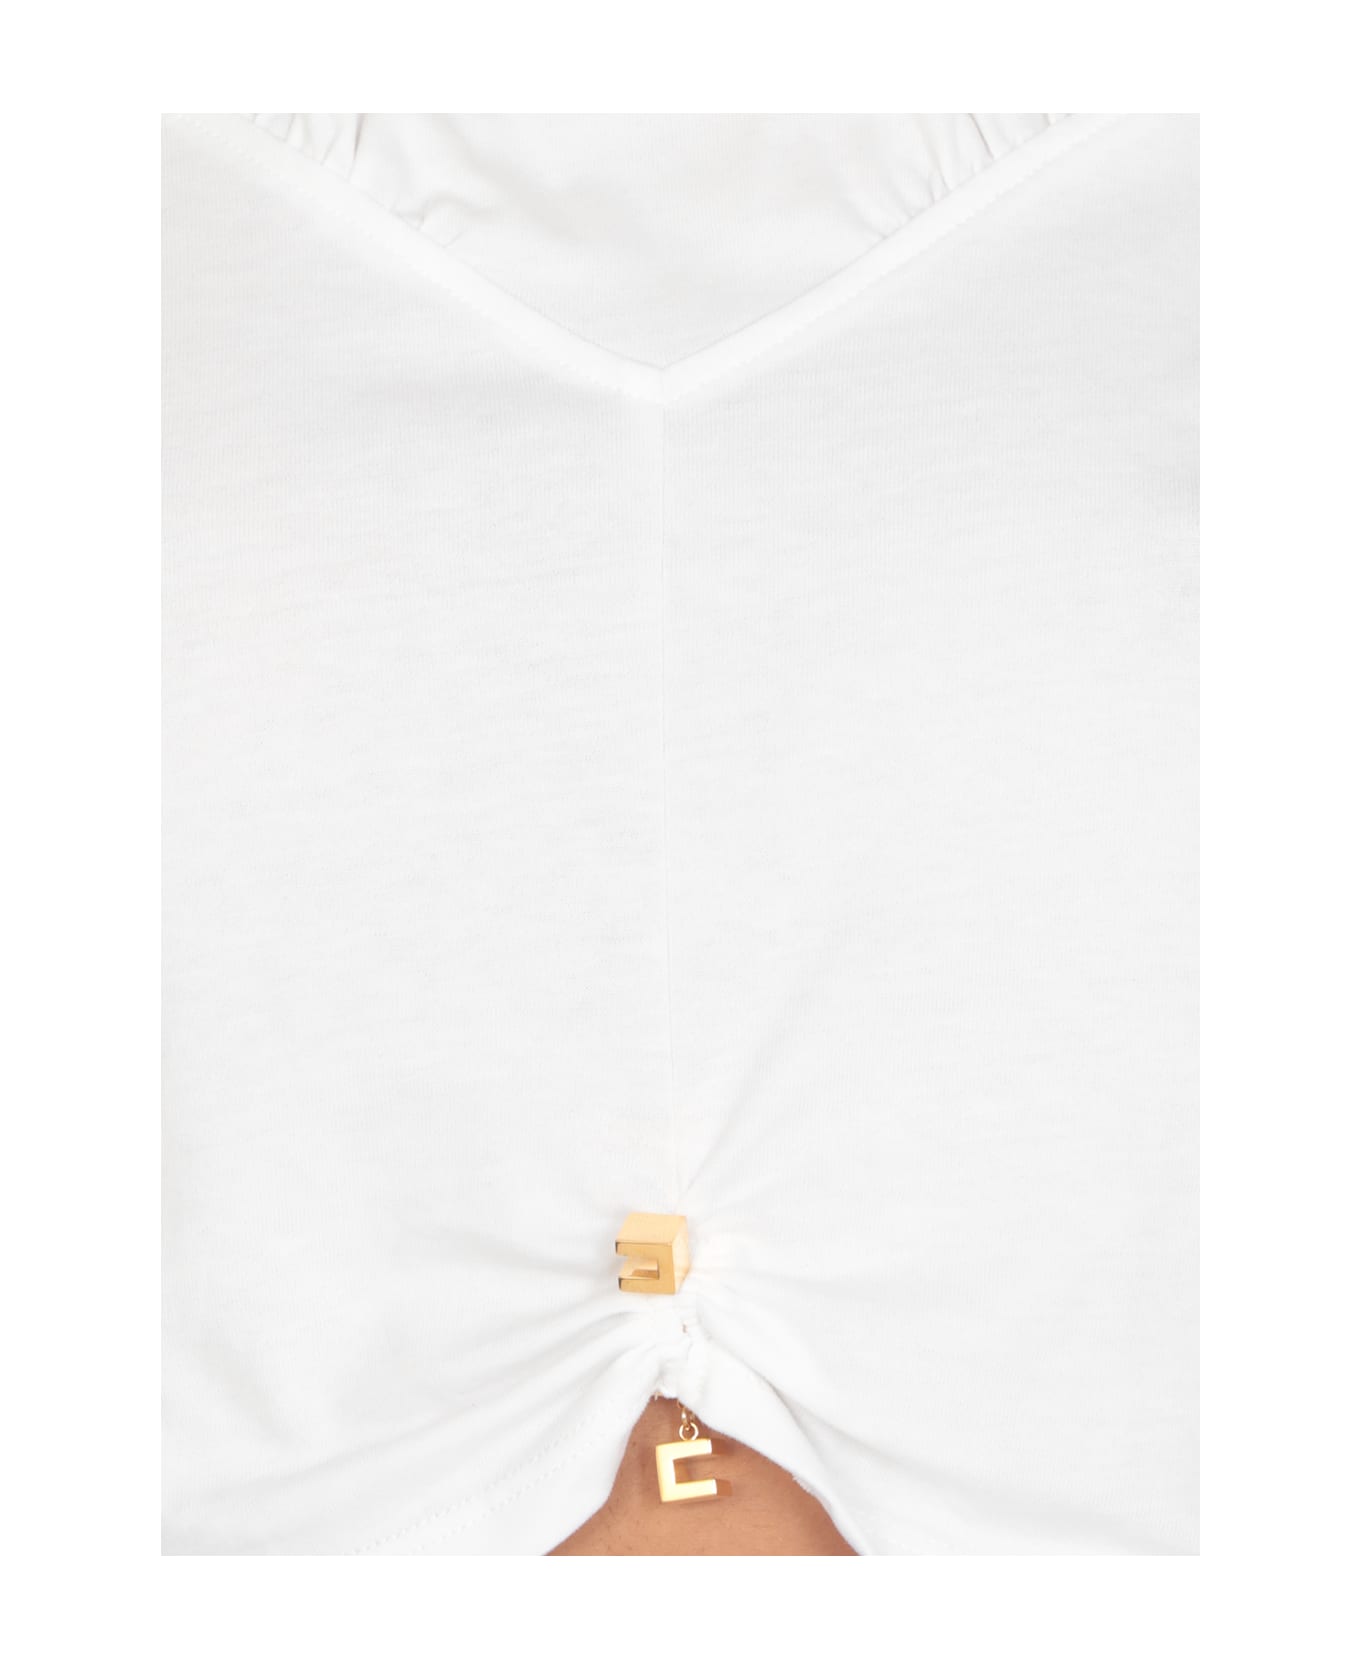 Elisabetta Franchi T-shirt With Drape Elisabetta Franchi - White